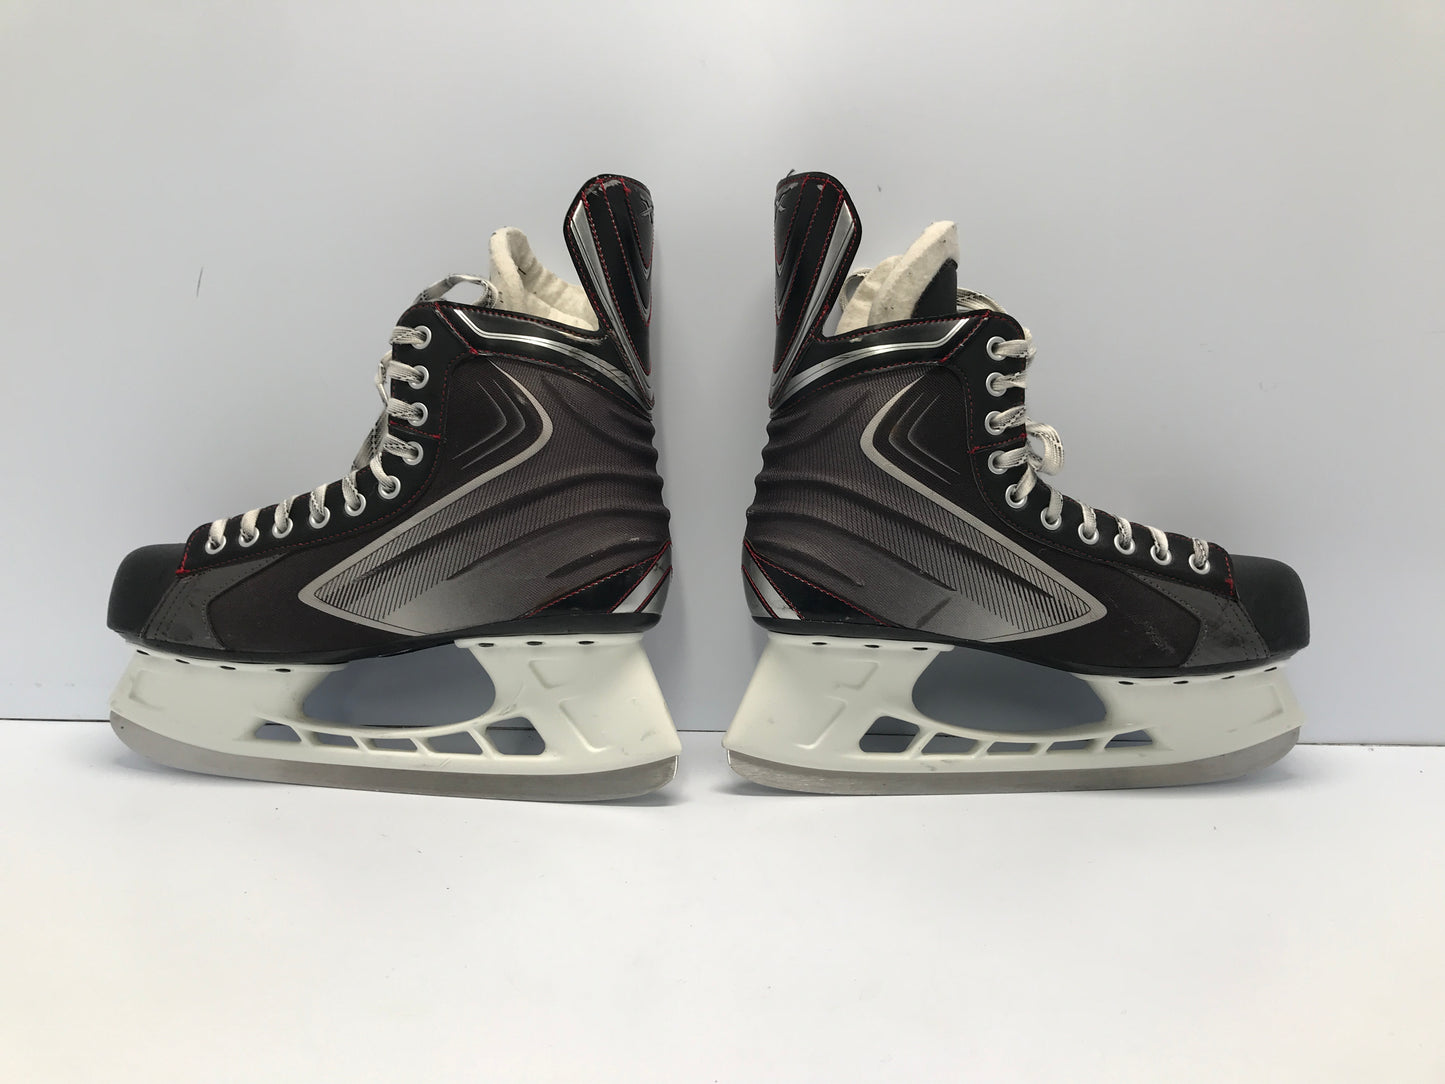 Hockey Skates Men's Size 11.5 Shoe 10 Skate Size Bauer Vapor Excellent Like New